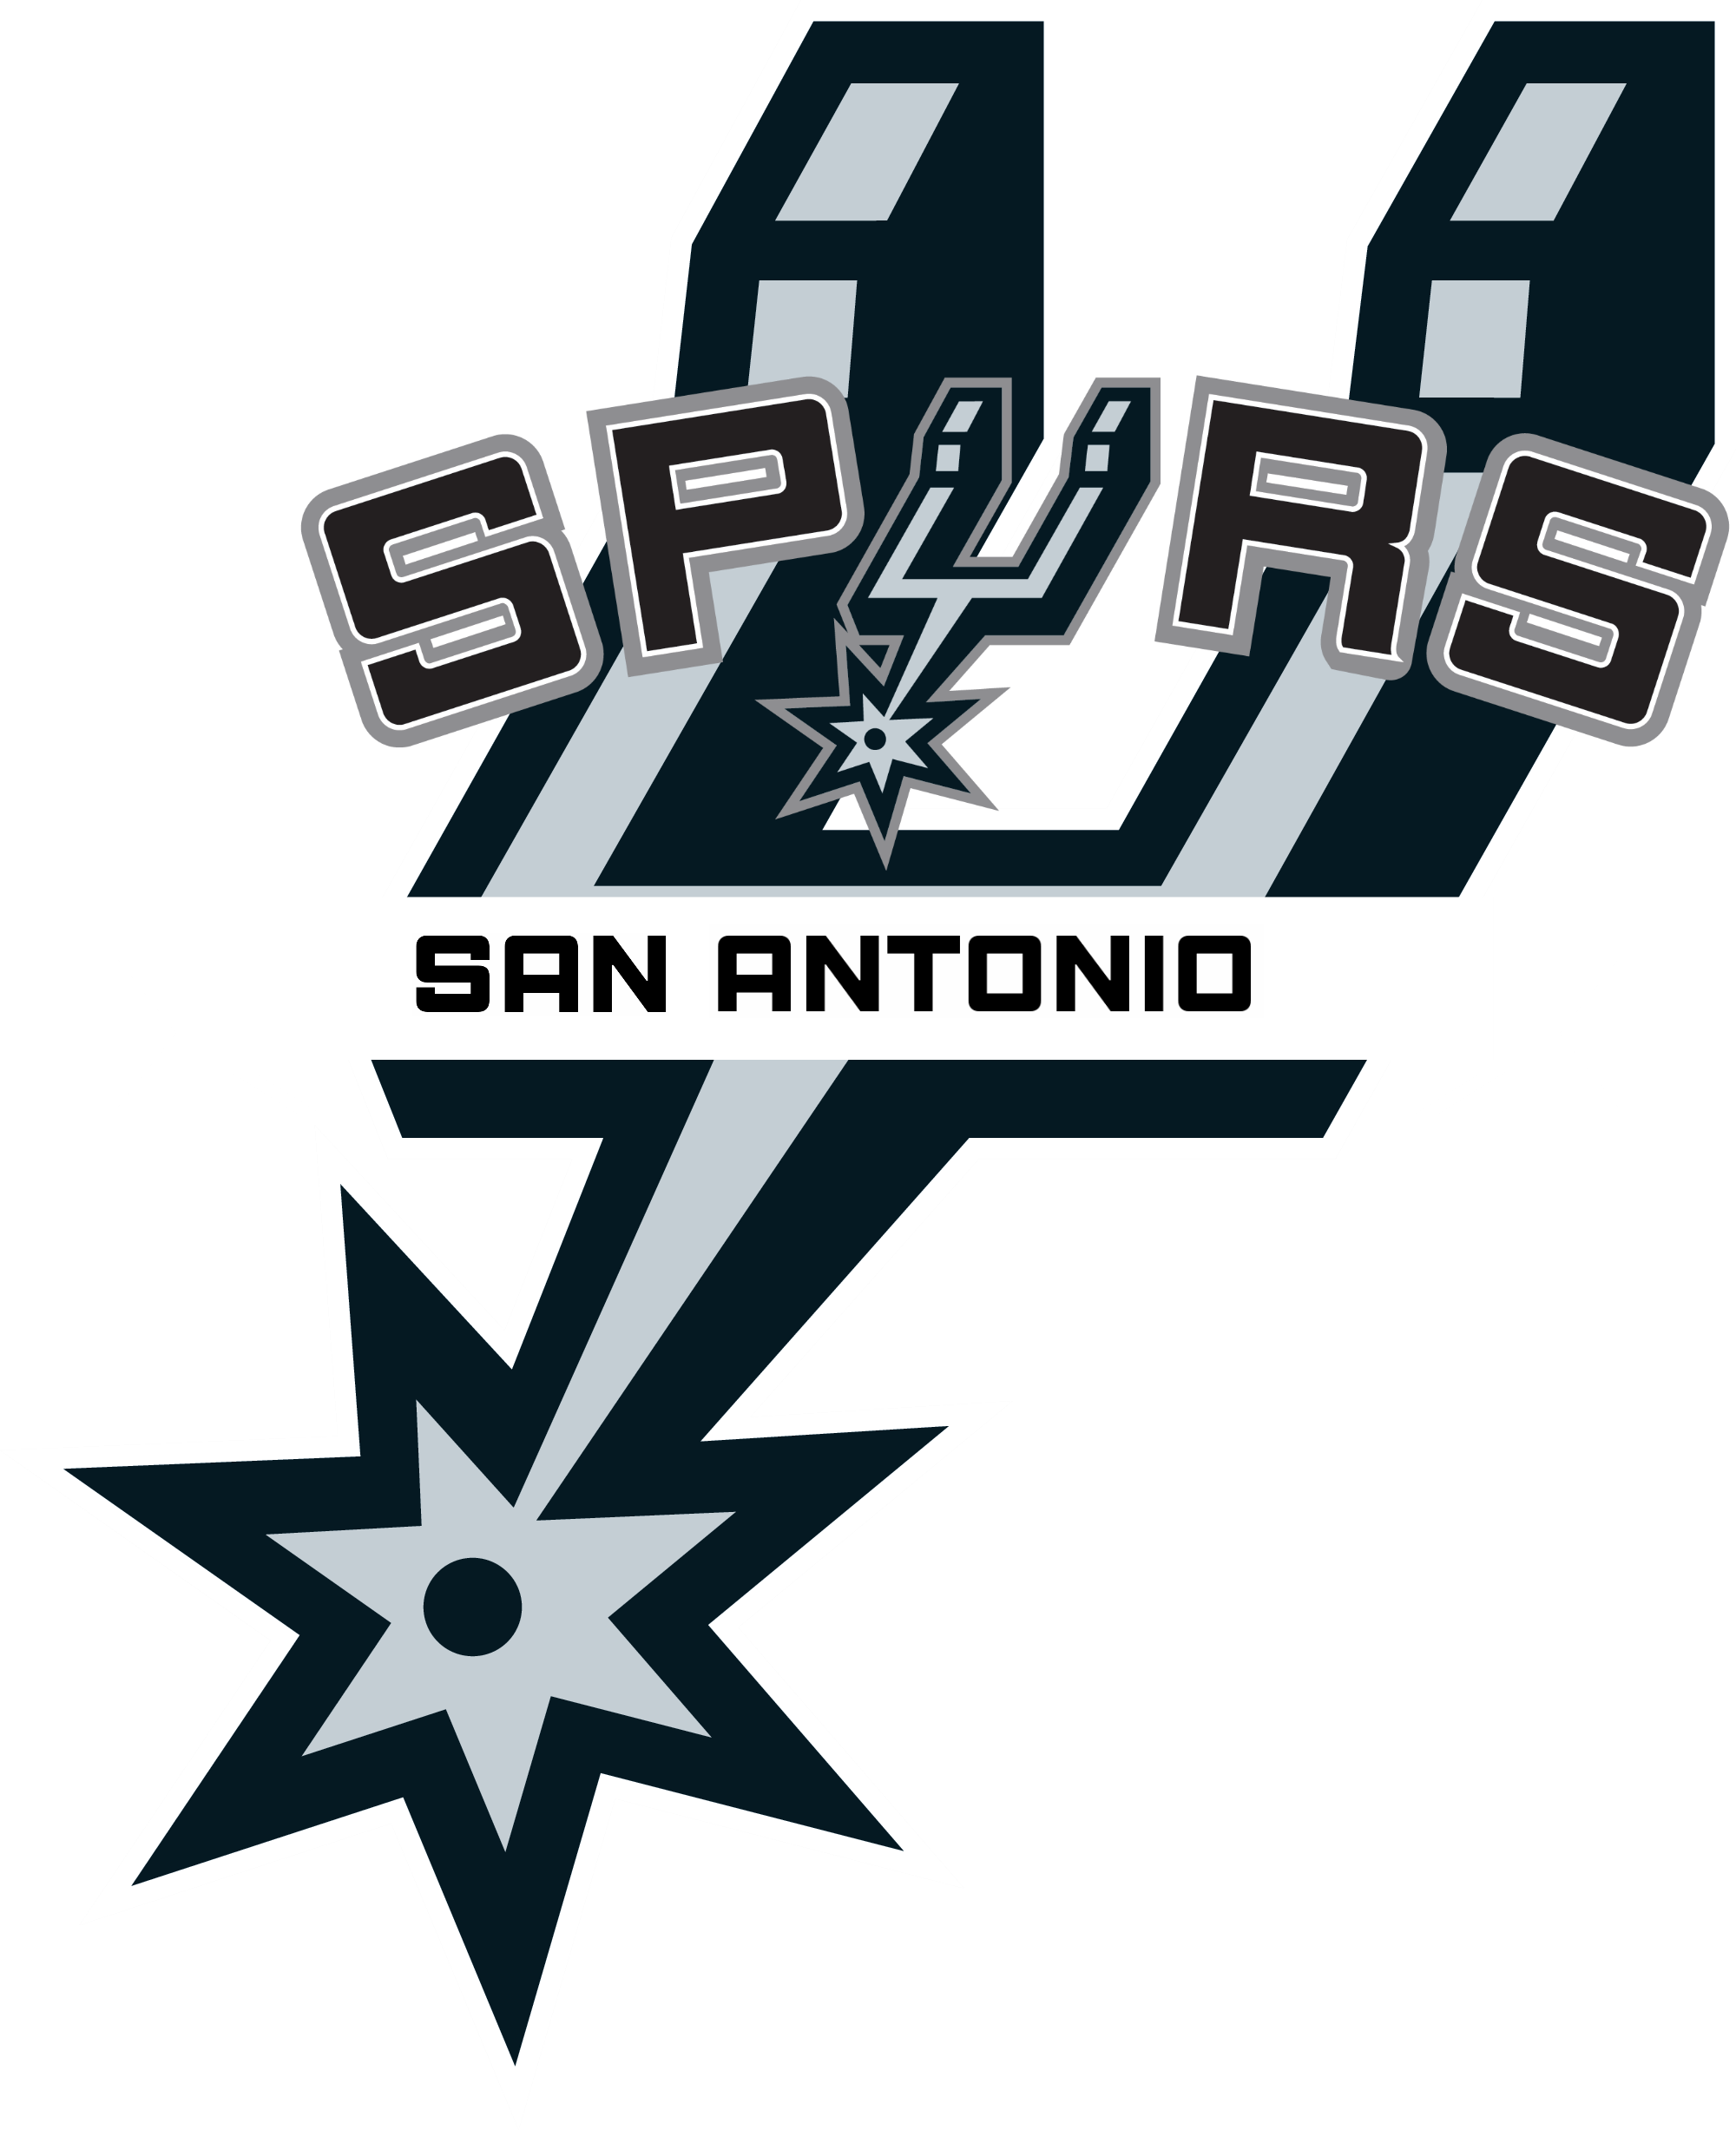 Download Spurs Drawing San Antonio Clipart Transparent Stock San Antonio Spurs Logo Png Png Image With No Background Pngkey Com san antonio spurs logo png png image